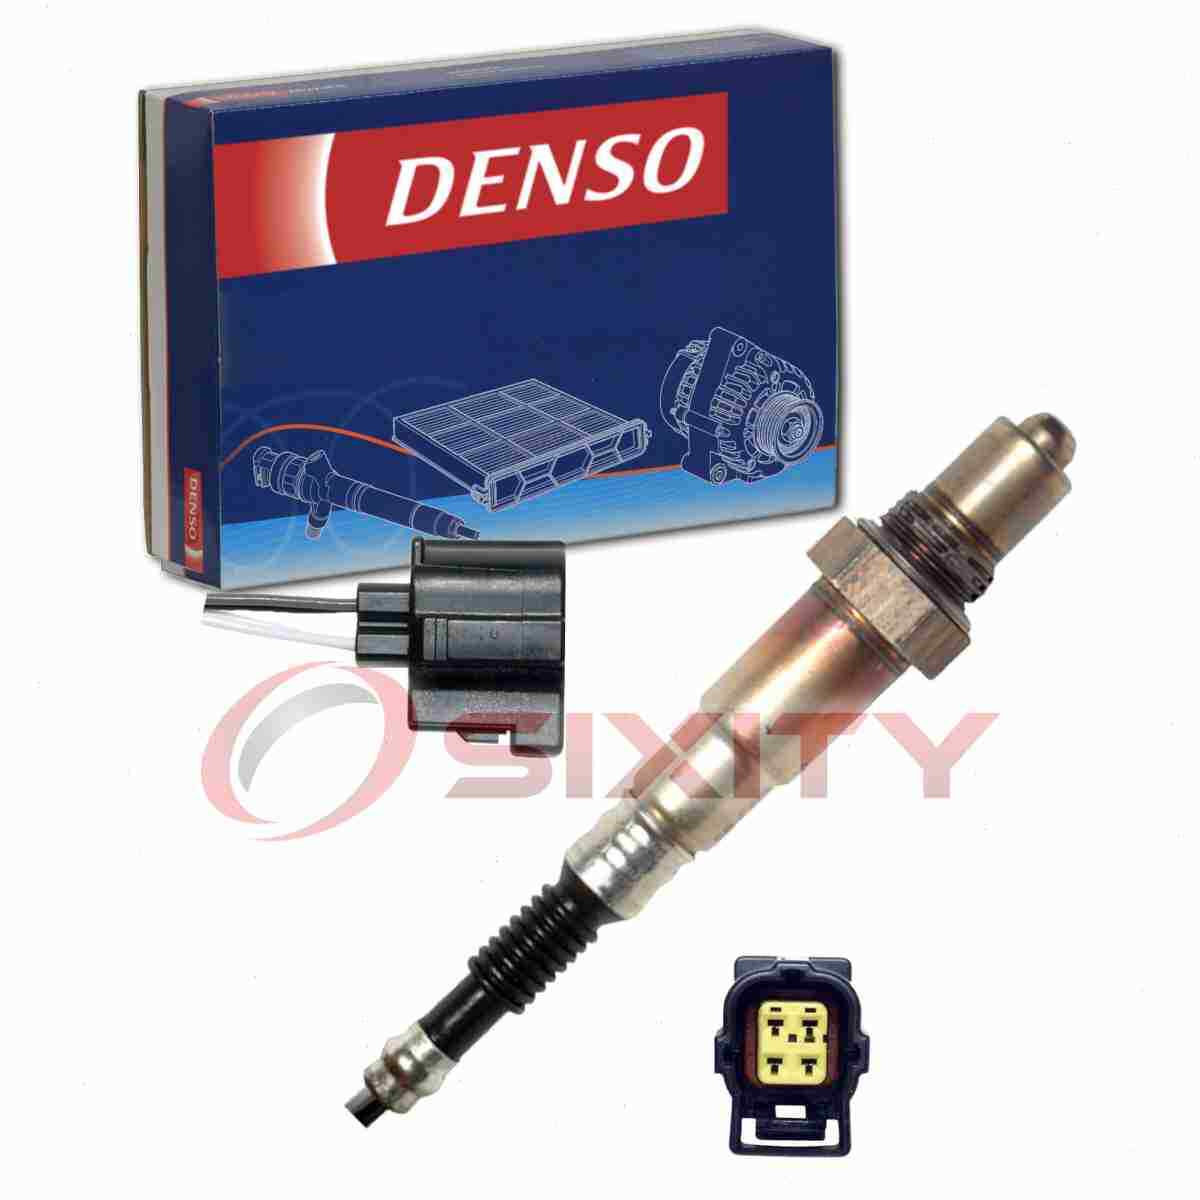 Denso Downstream Left Oxygen Sensor for 2007-2009 Mercedes-Benz CLK63 AMG qm